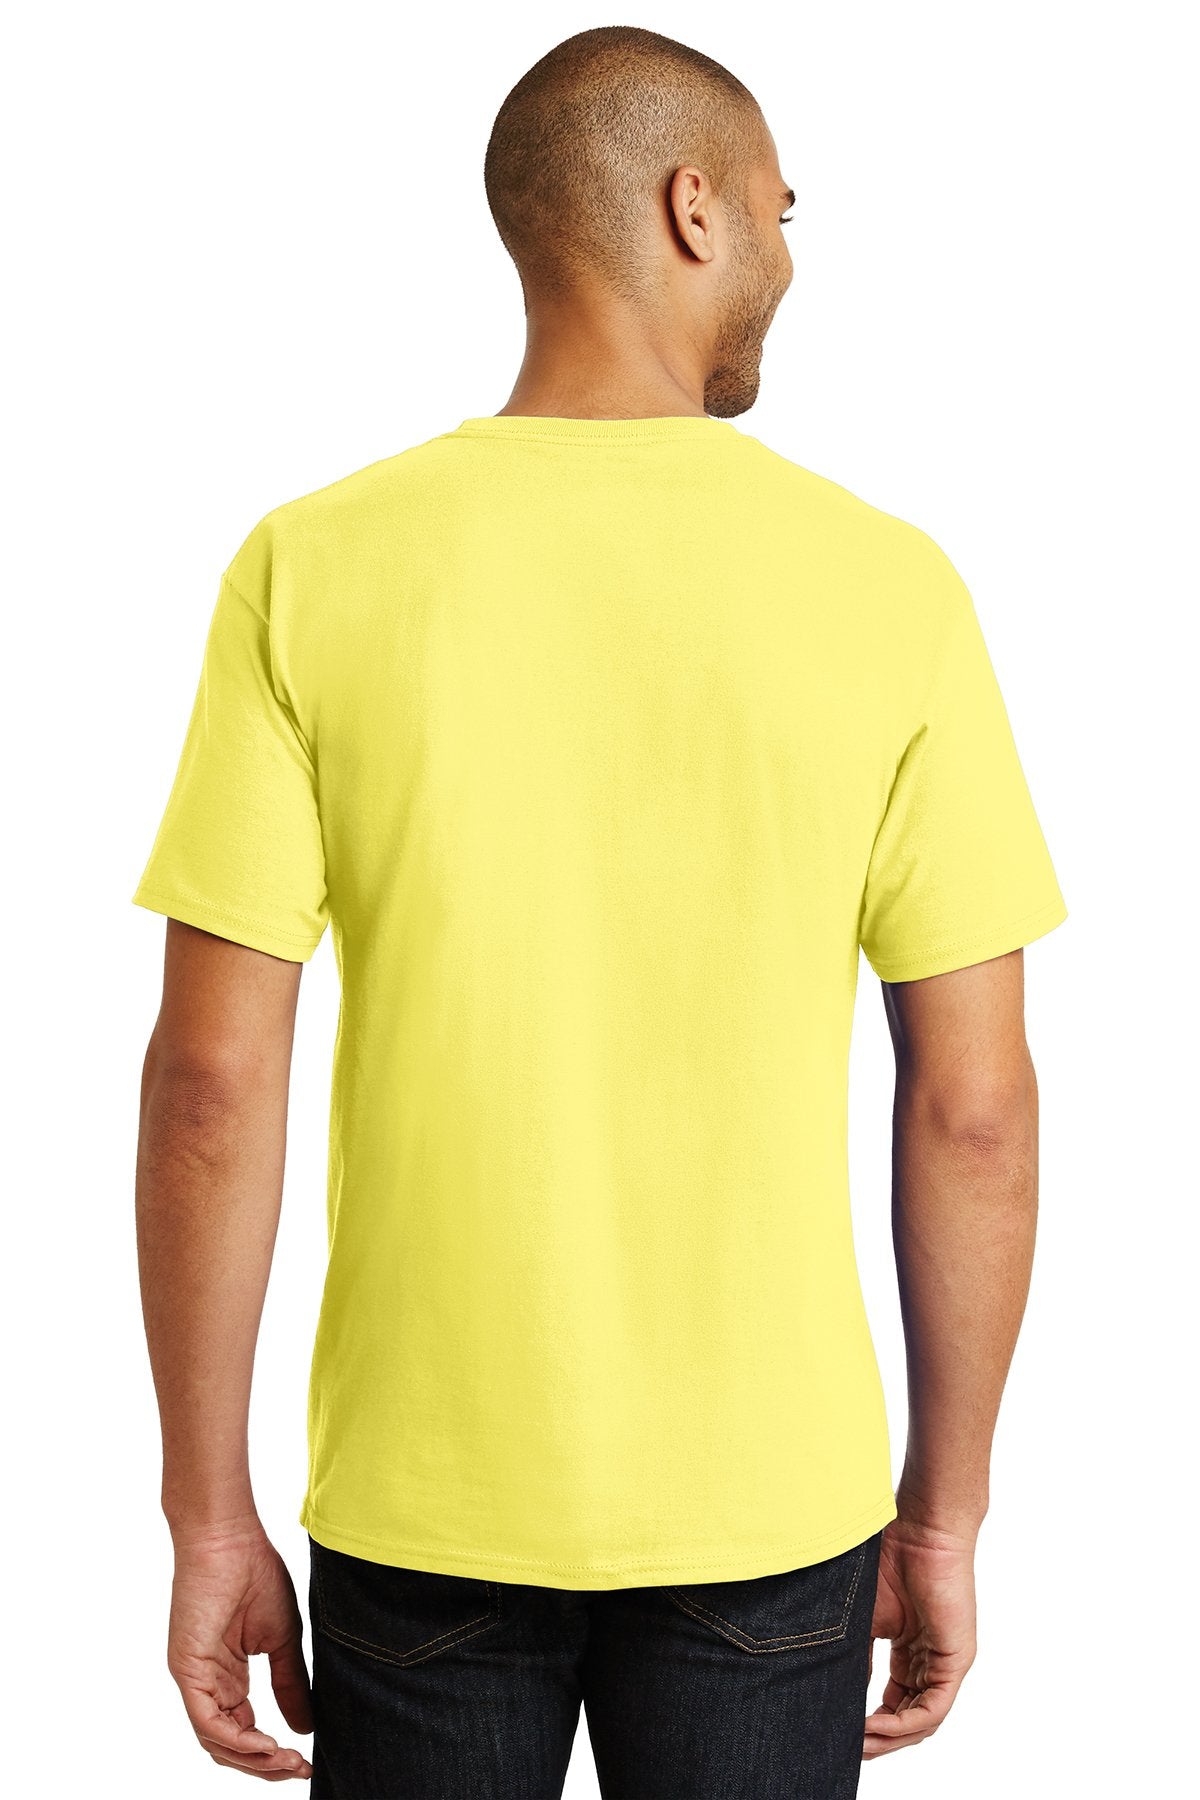 hanes tagless cotton t shirt 5250 yellow